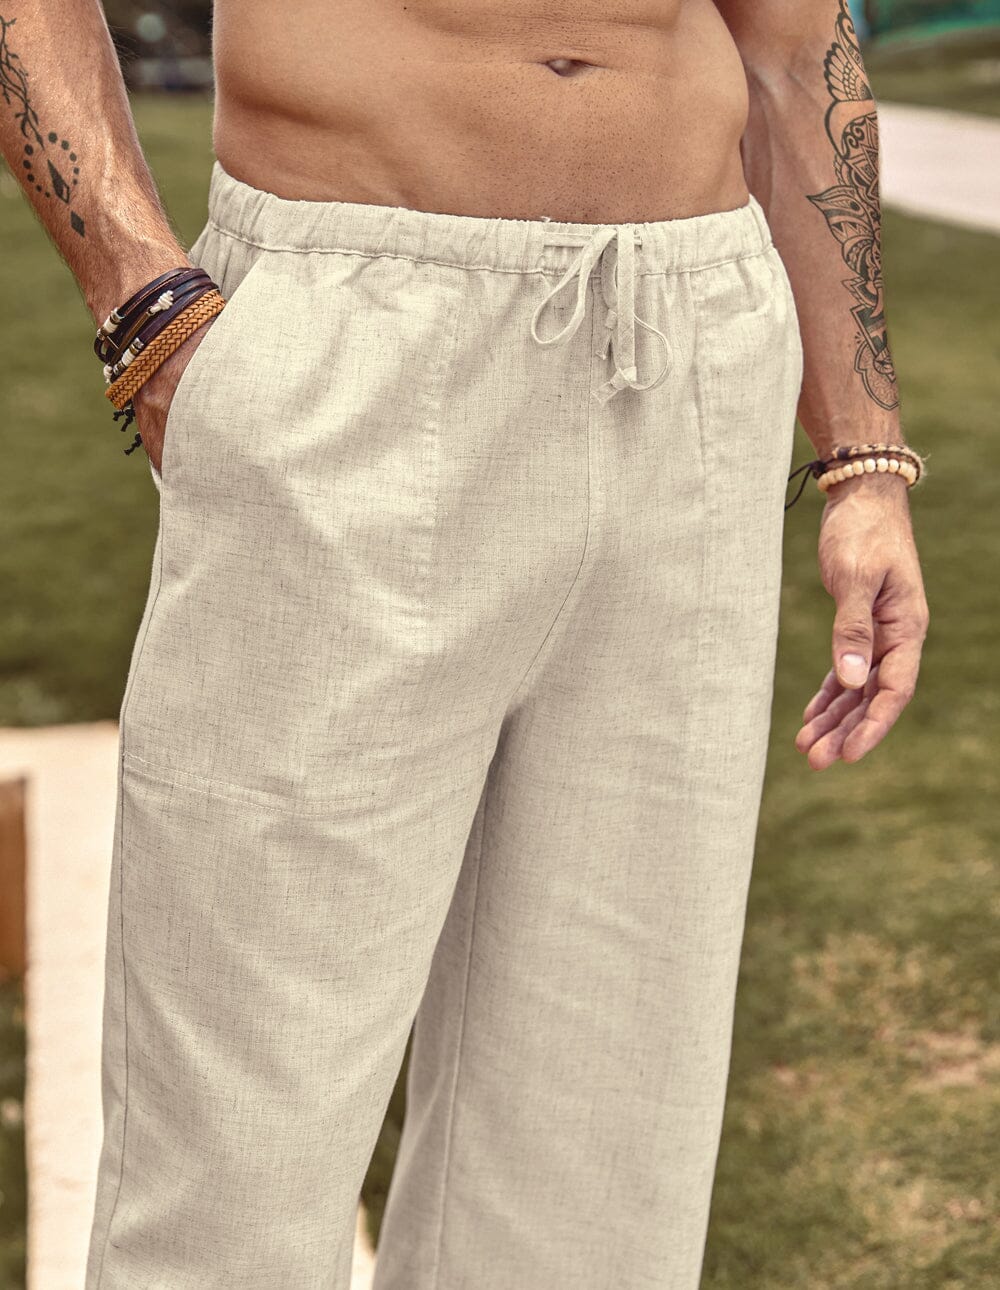 Groom's Linen Pants for Beach Weddings - Island Importer